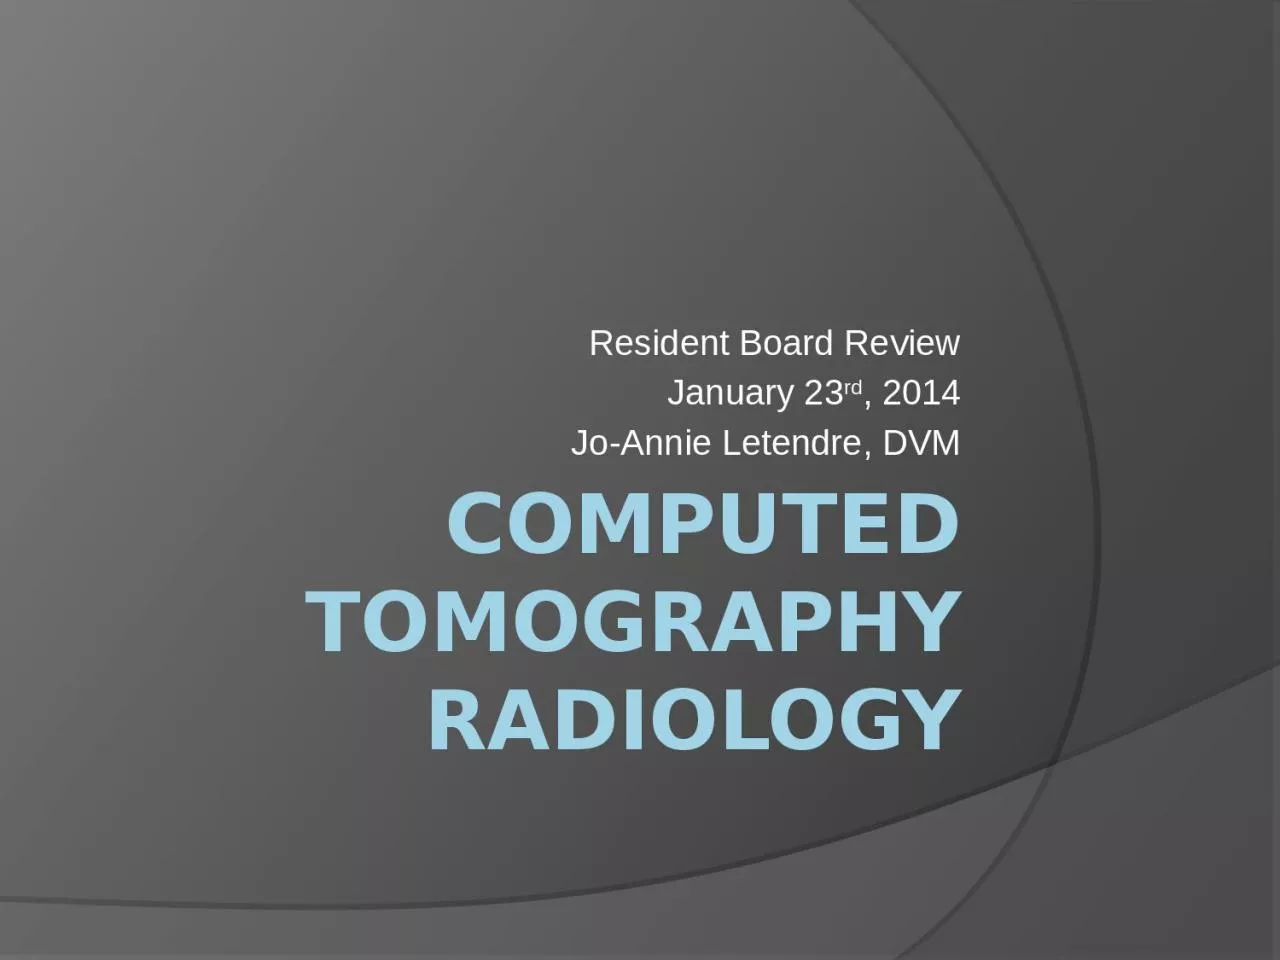 COMPuted tomography RADIOLOGY